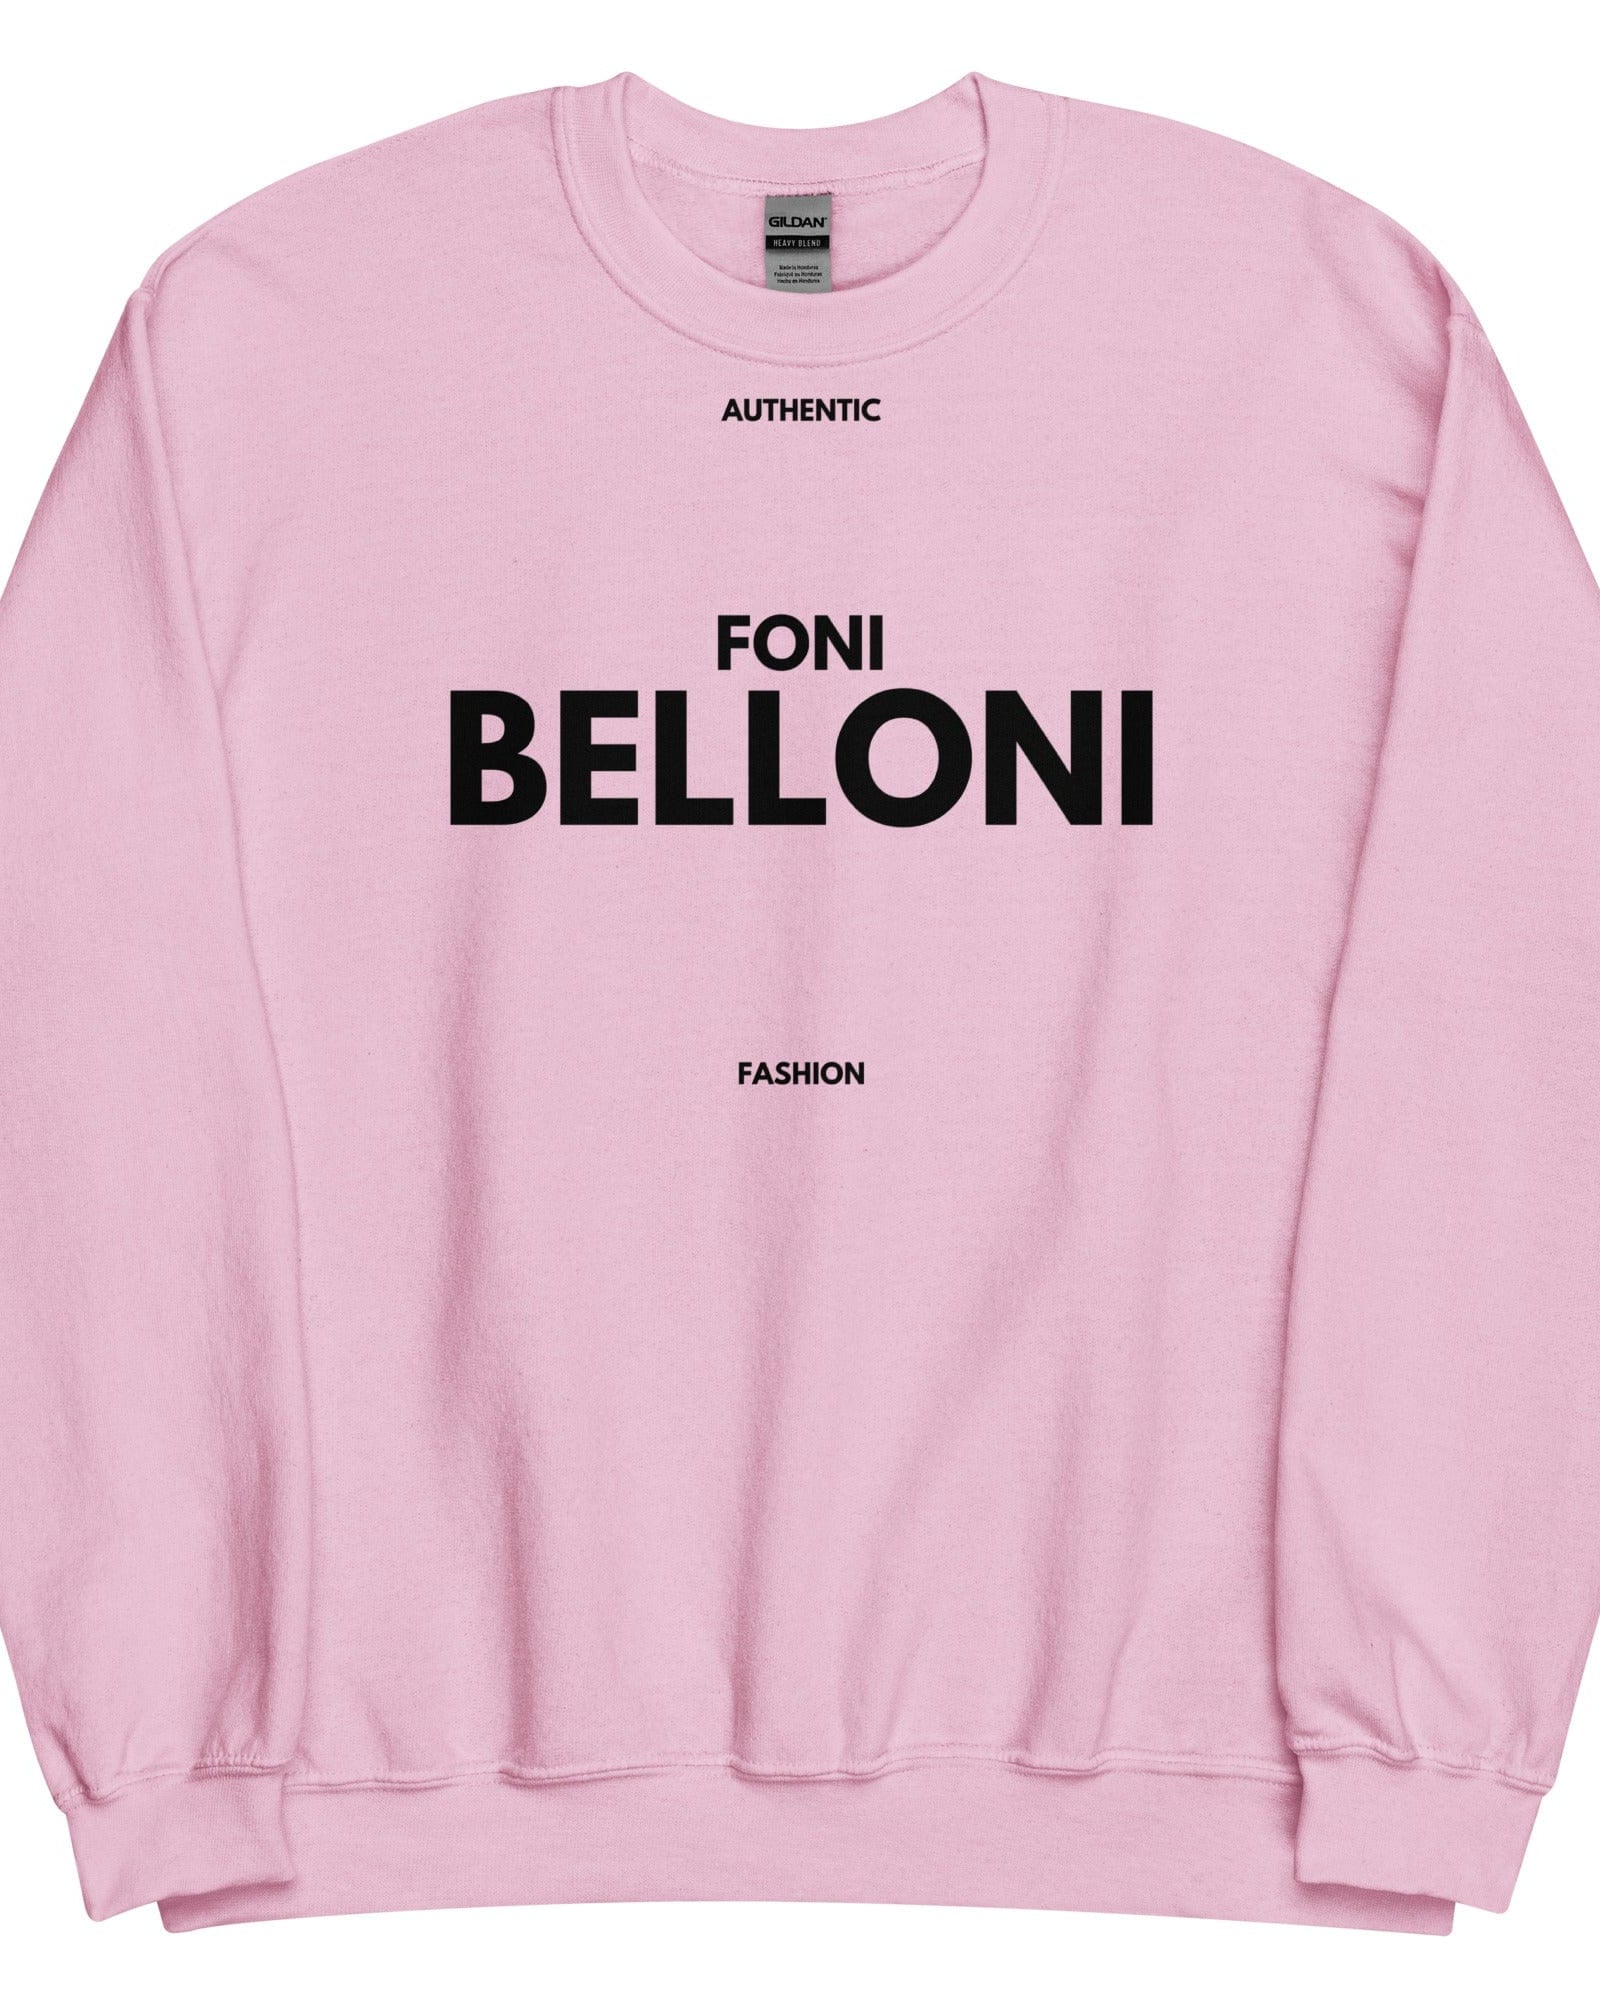 Foni Belloni Authentic Fashion Sweatshirt Light Pink / S Sweatshirt Jolly & Goode